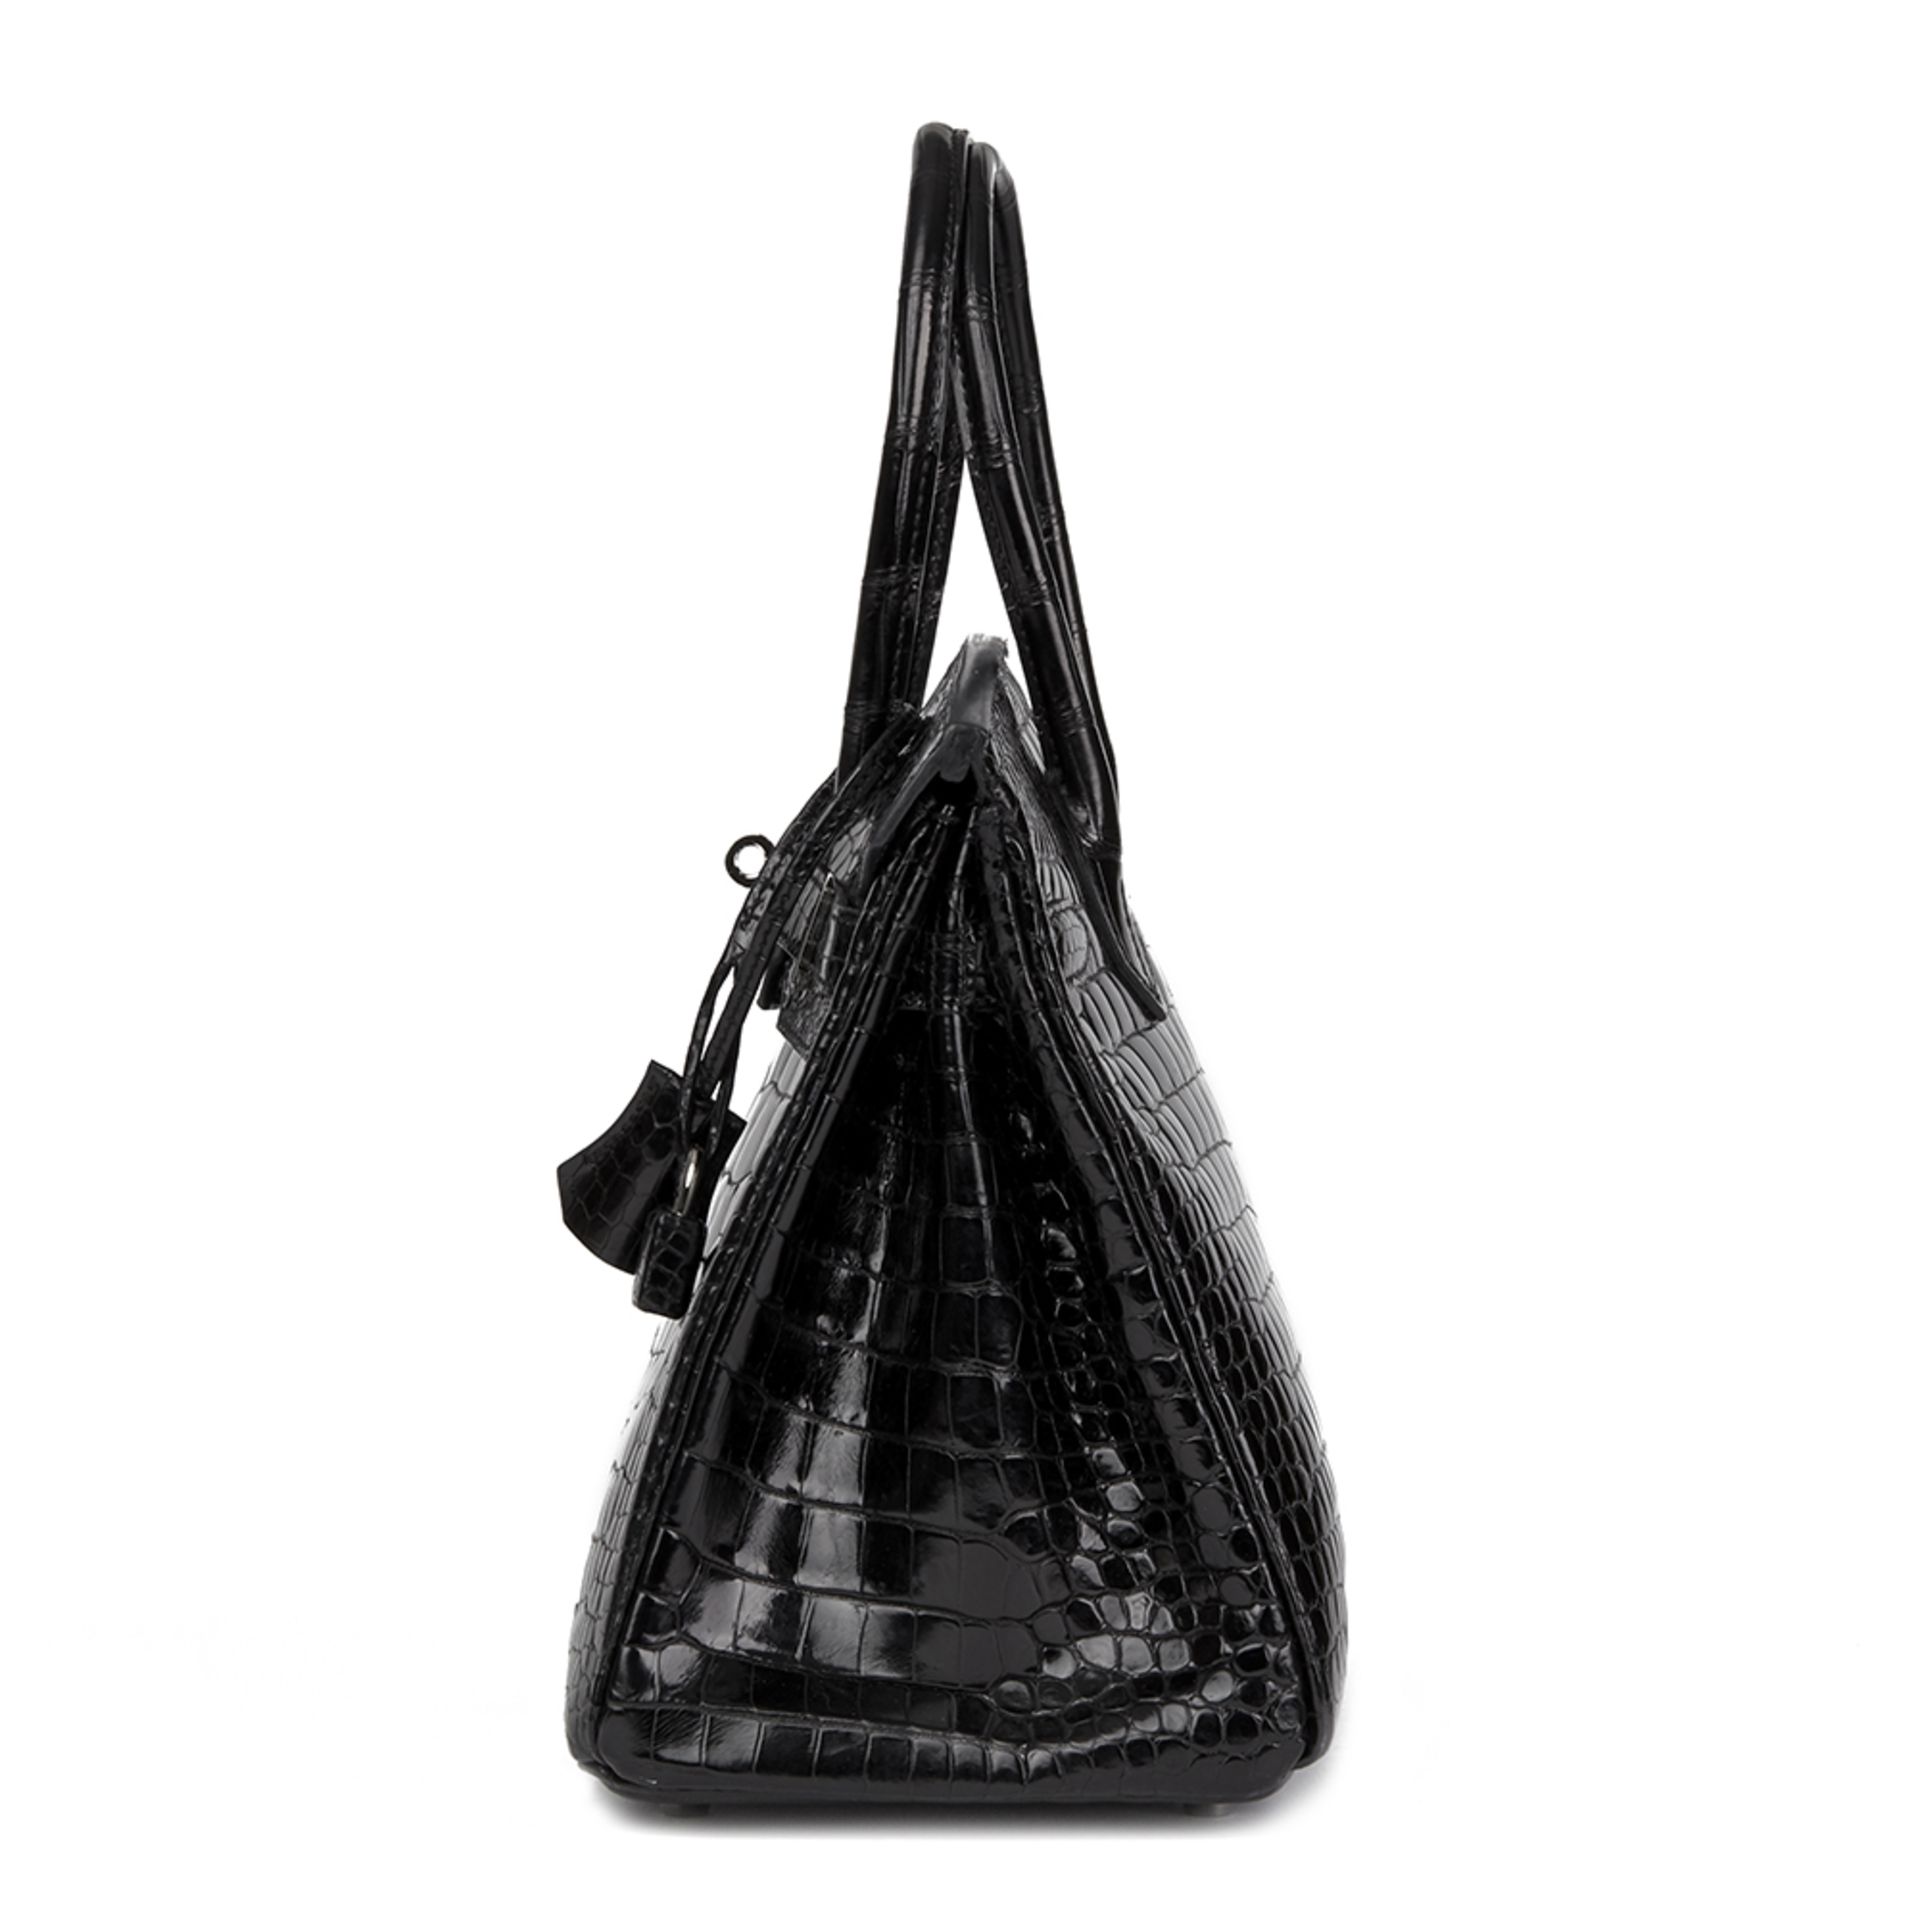 Hermès Black Shiny Porosus Crocodile Leather Birkin 30Cm - Image 11 of 12